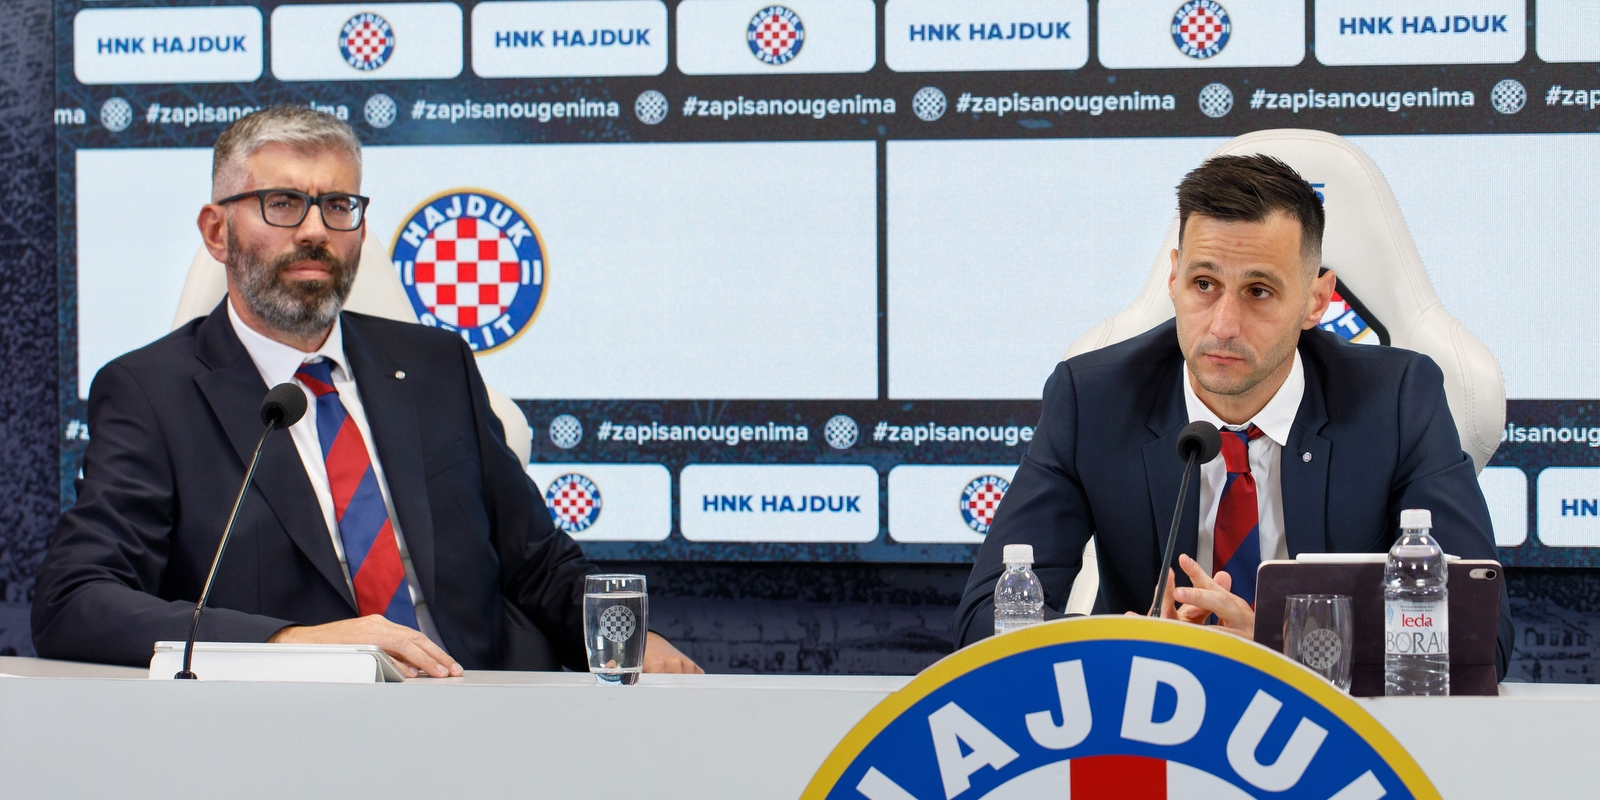 Nikola Kalinić is the new sports director